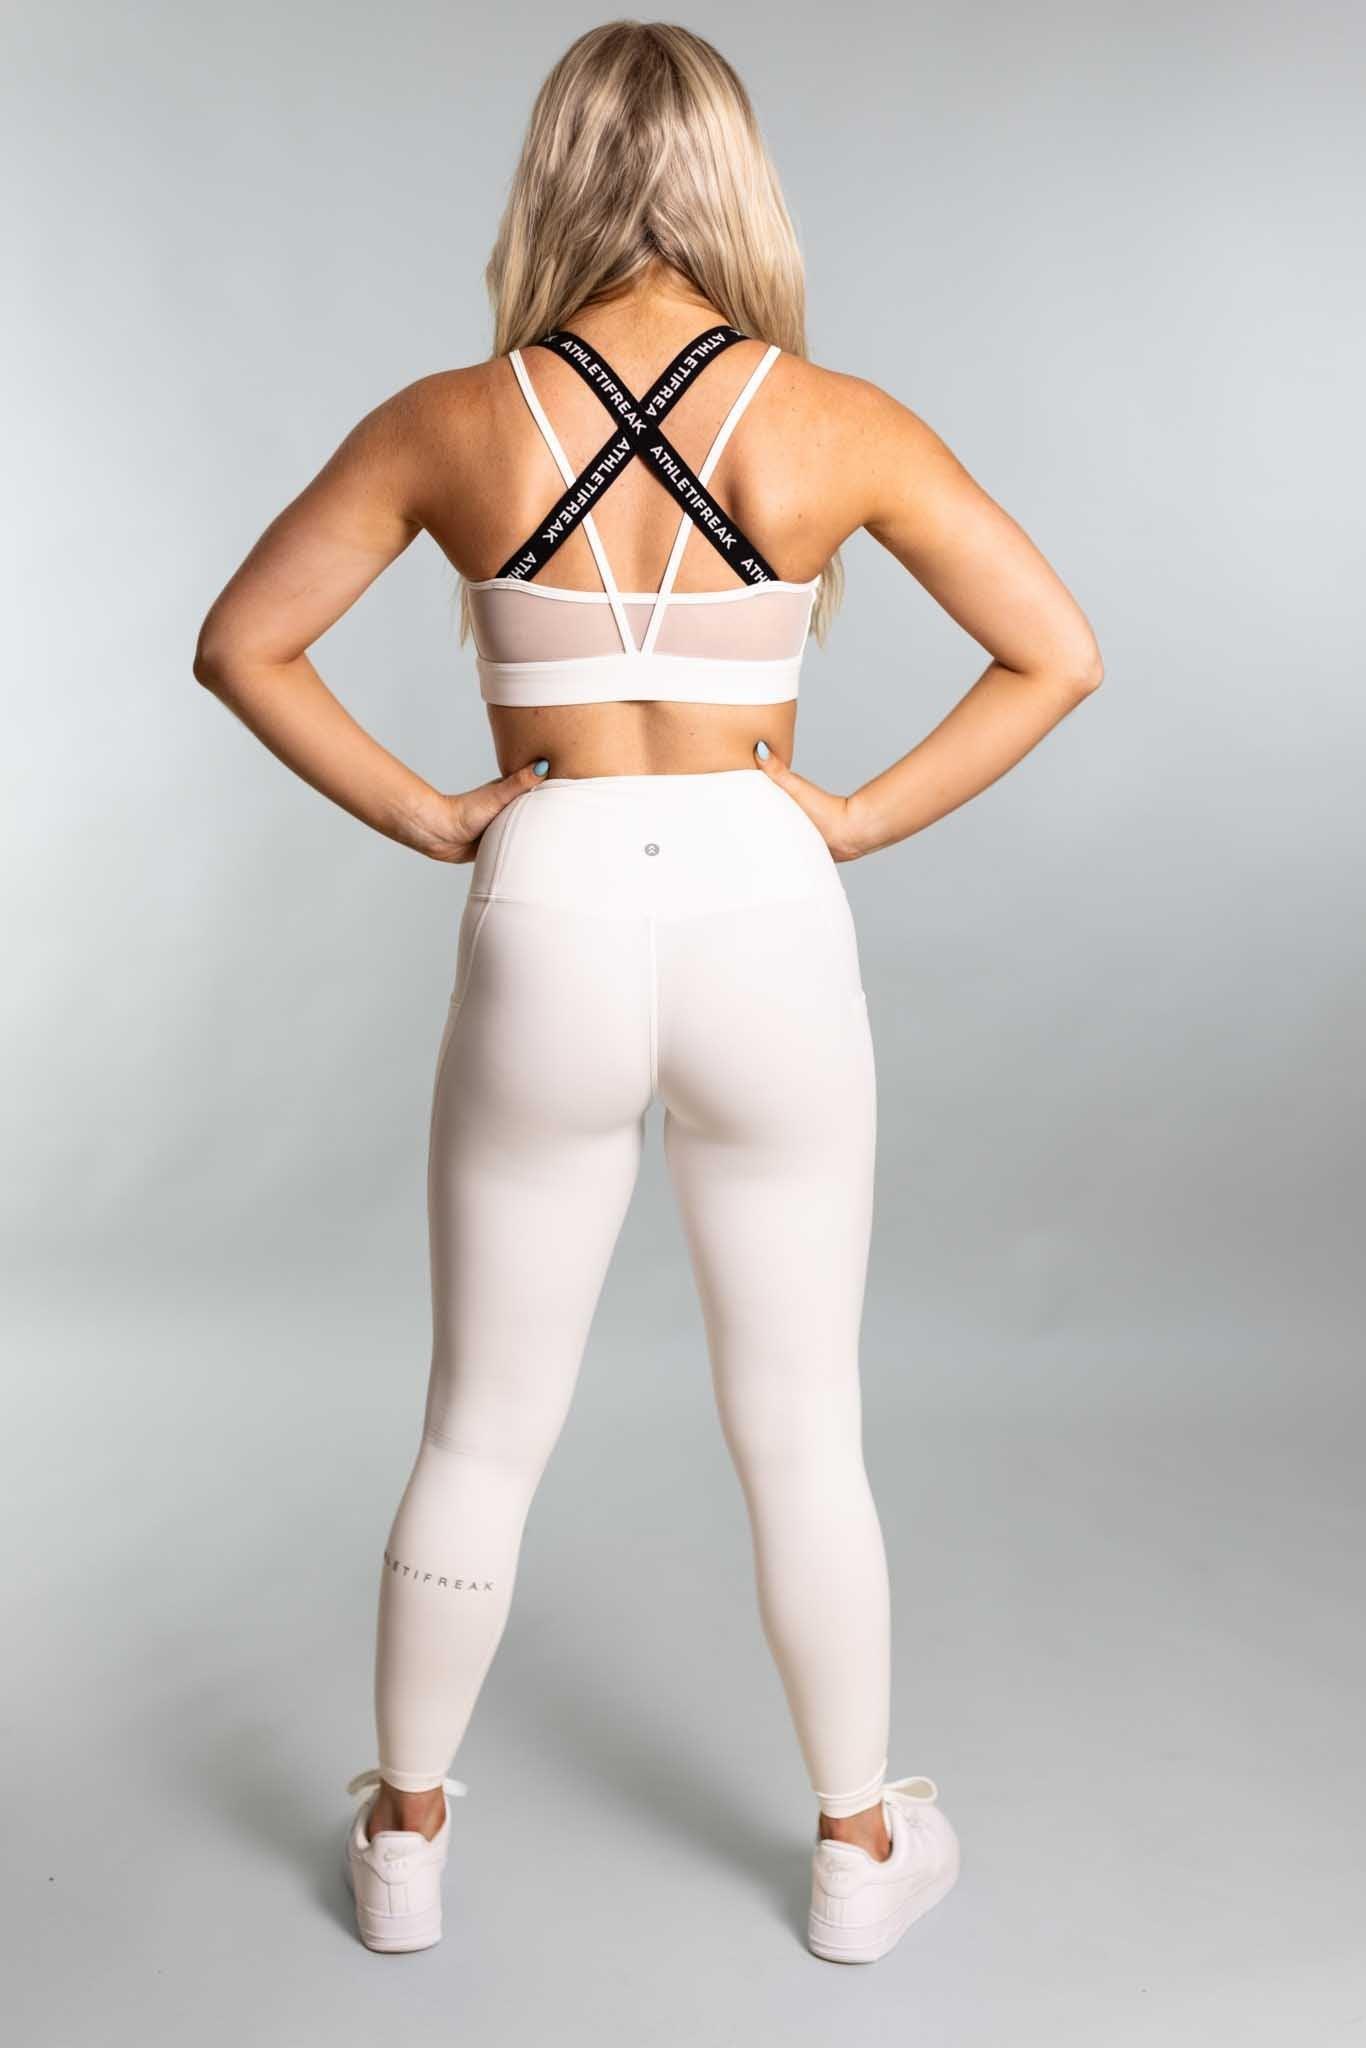 Skylork 4 way cotton lycra leggings for women's/girls combo white/yellow